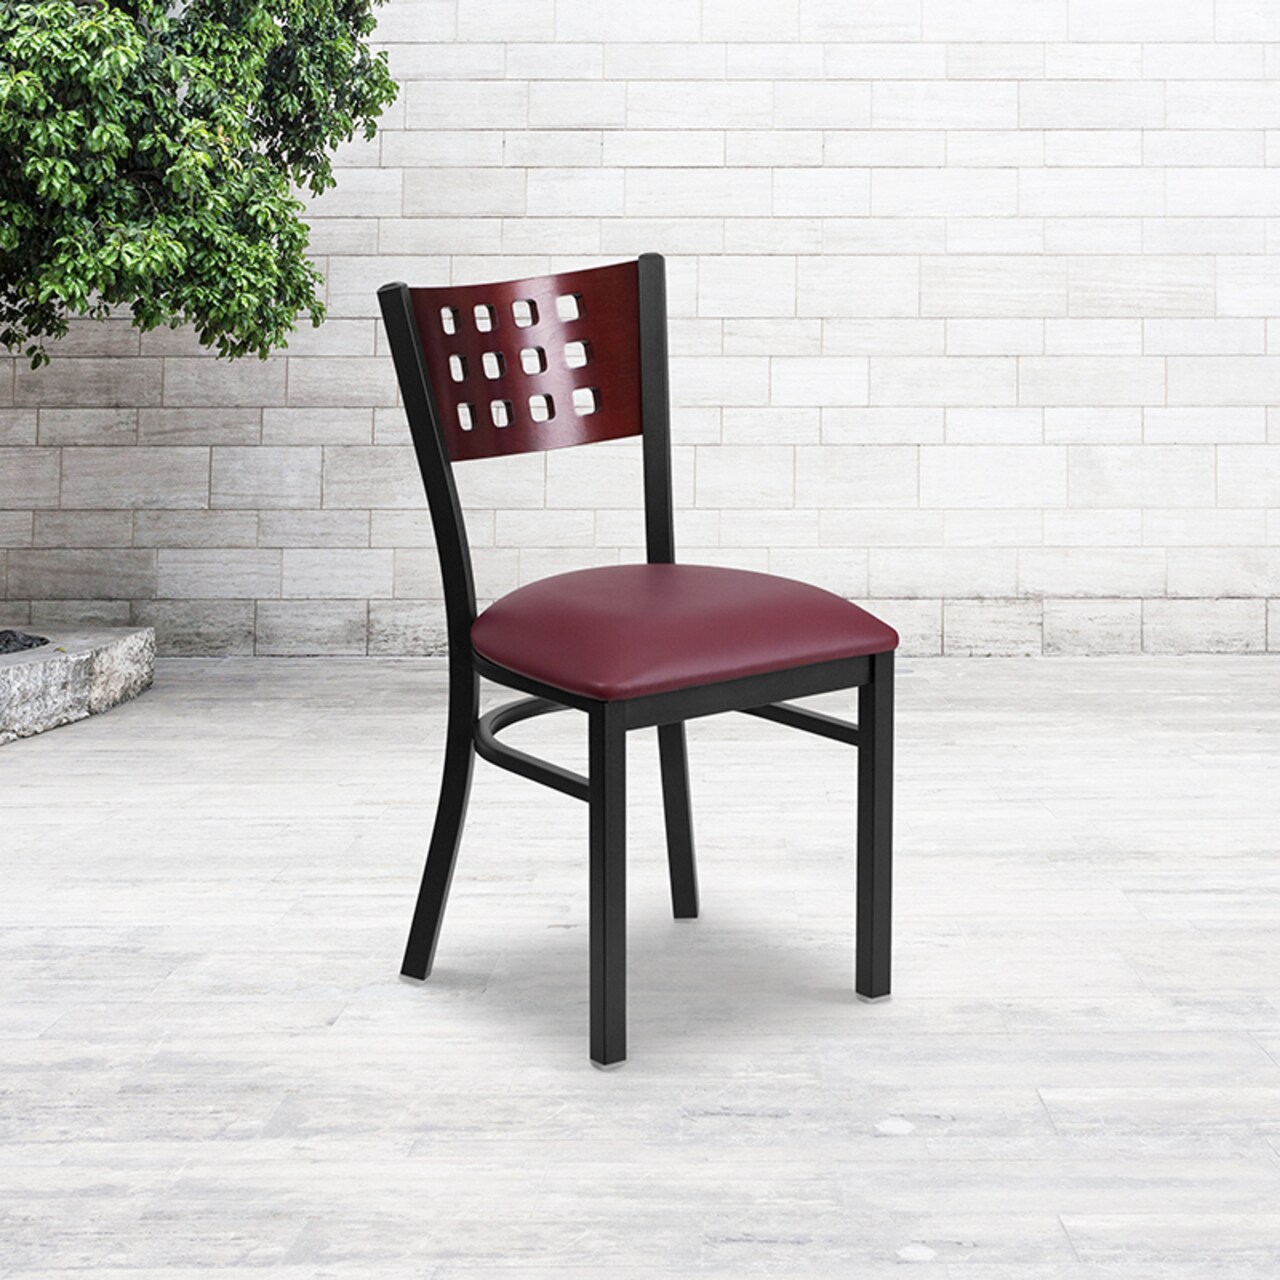 Flash Furniture HERCULES Series Black Cutout Back Metal Restaurant Chair - Mahogany Wood Back, Burgundy Vinyl Seat